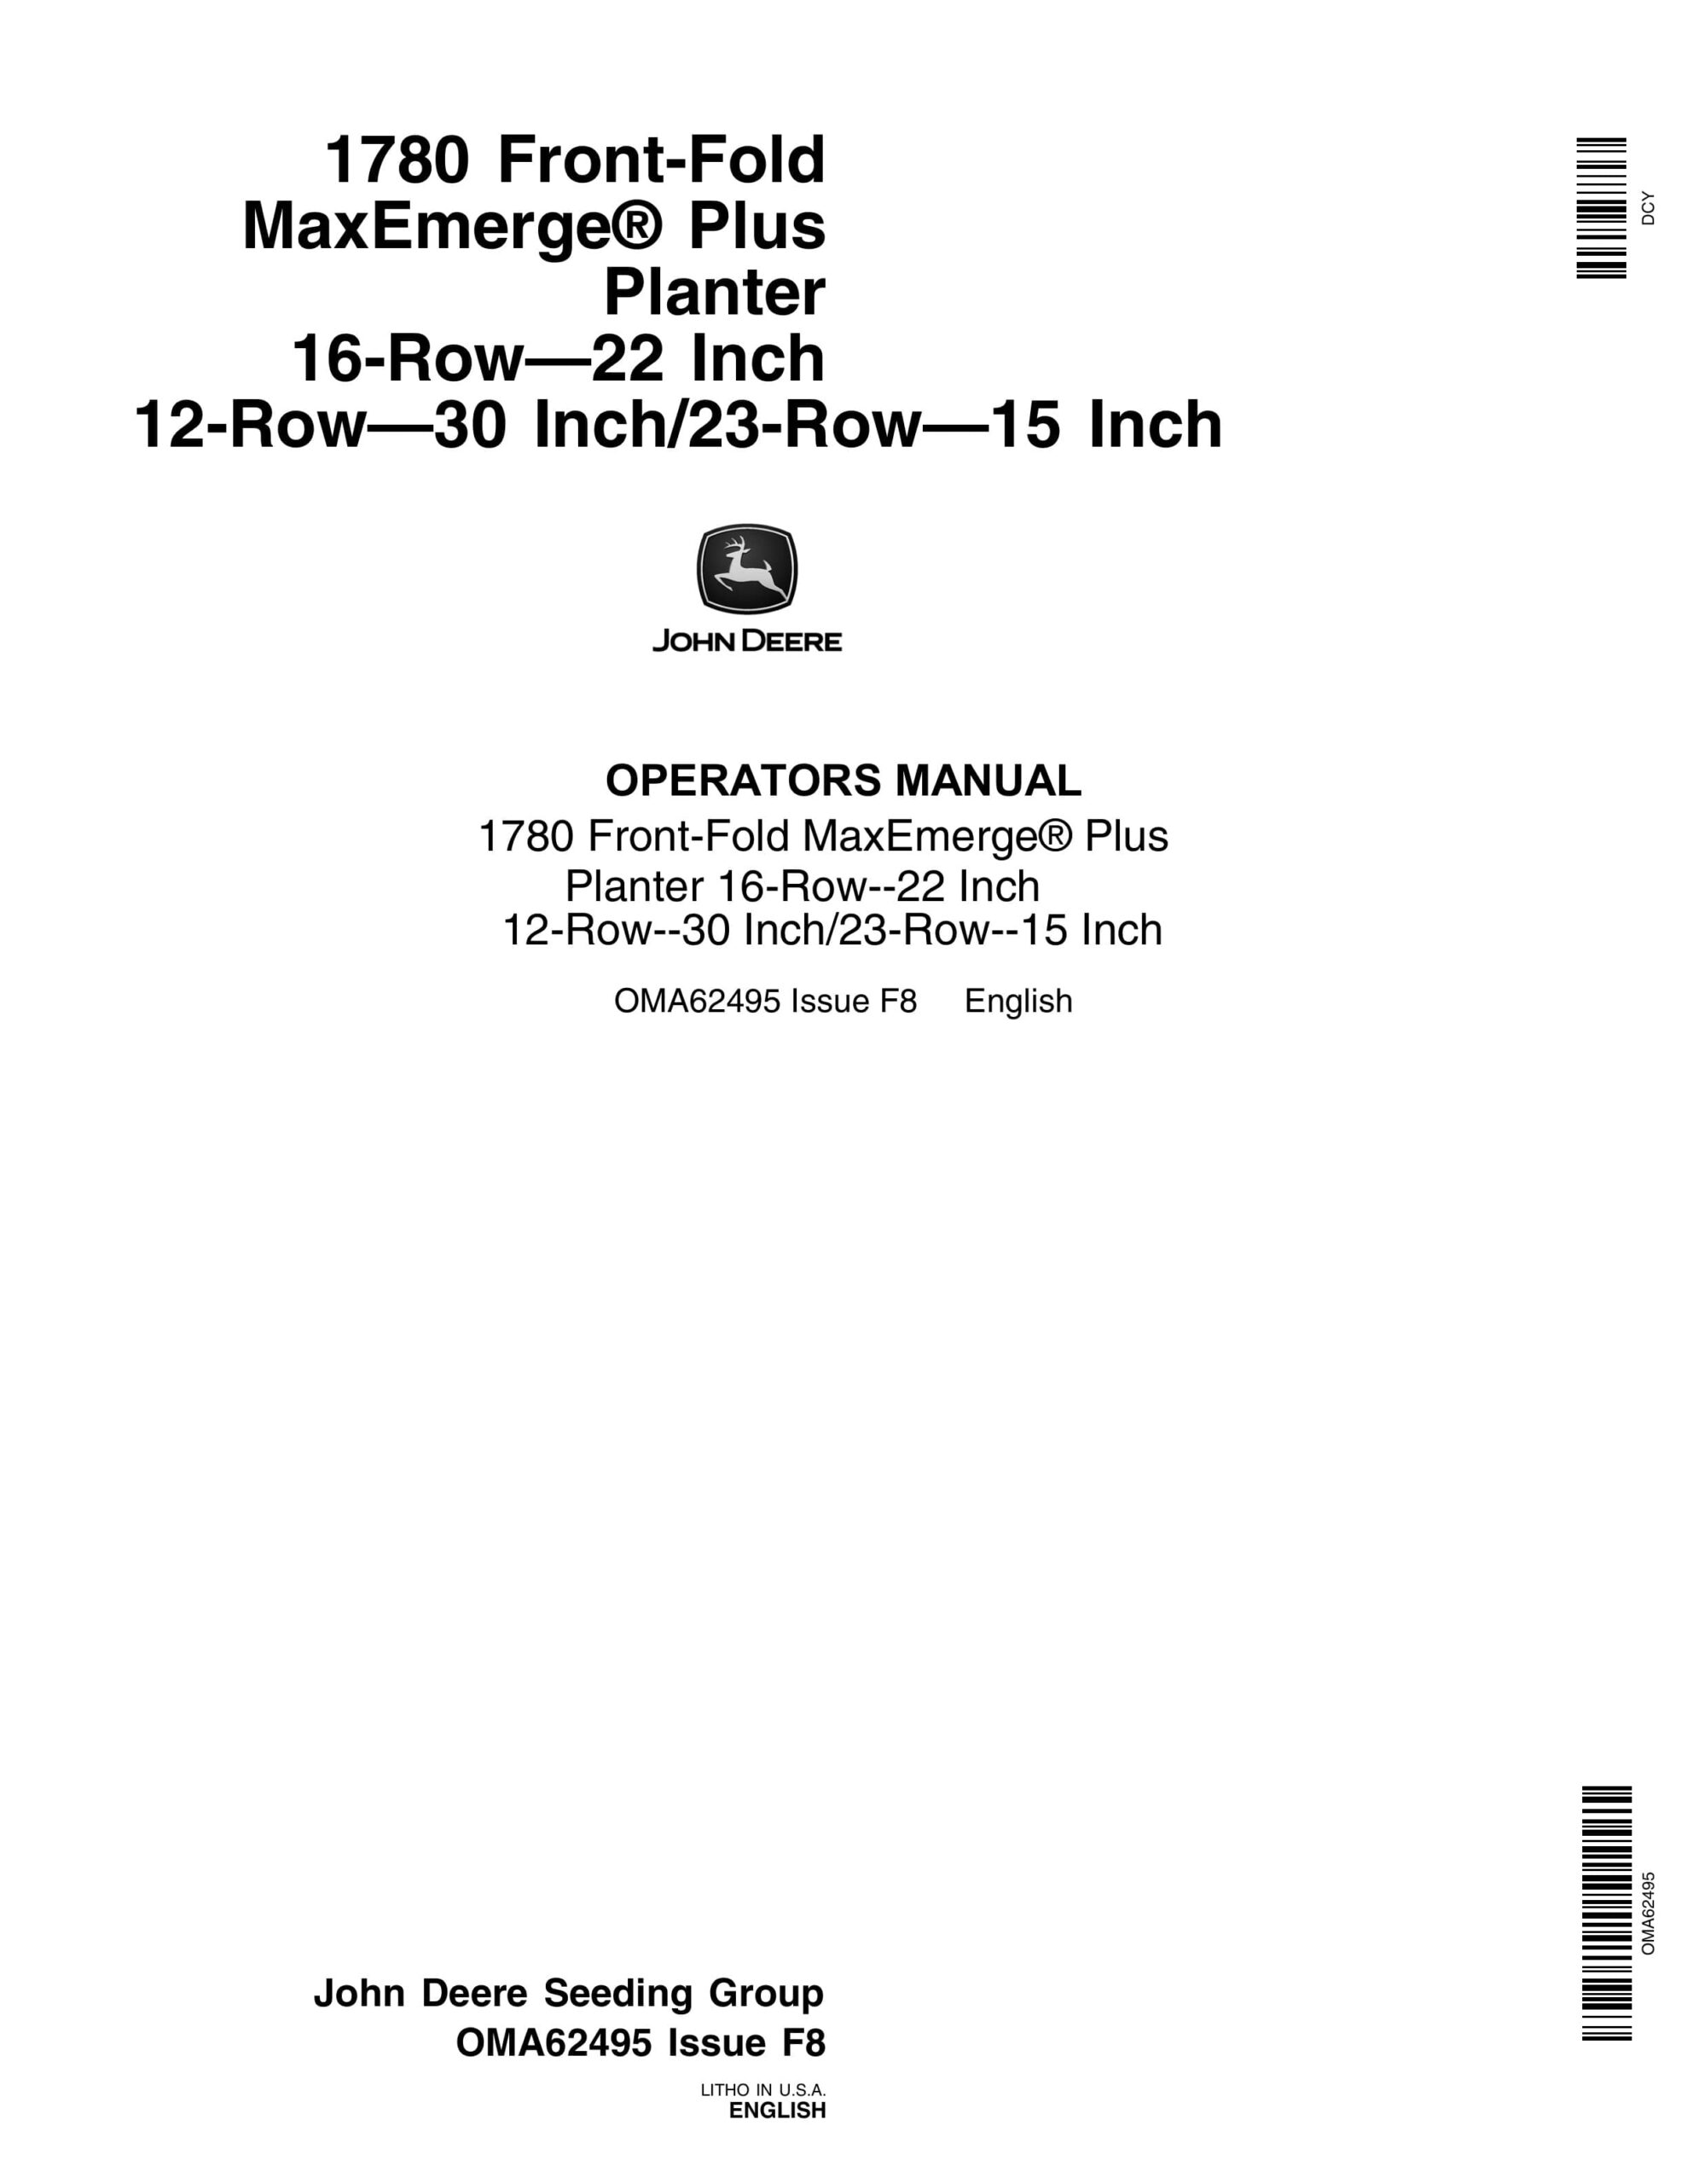 John Deere 1780 Front-Fold MaxEmerge Plus Planter 16 Operator Manual OMA62495-1